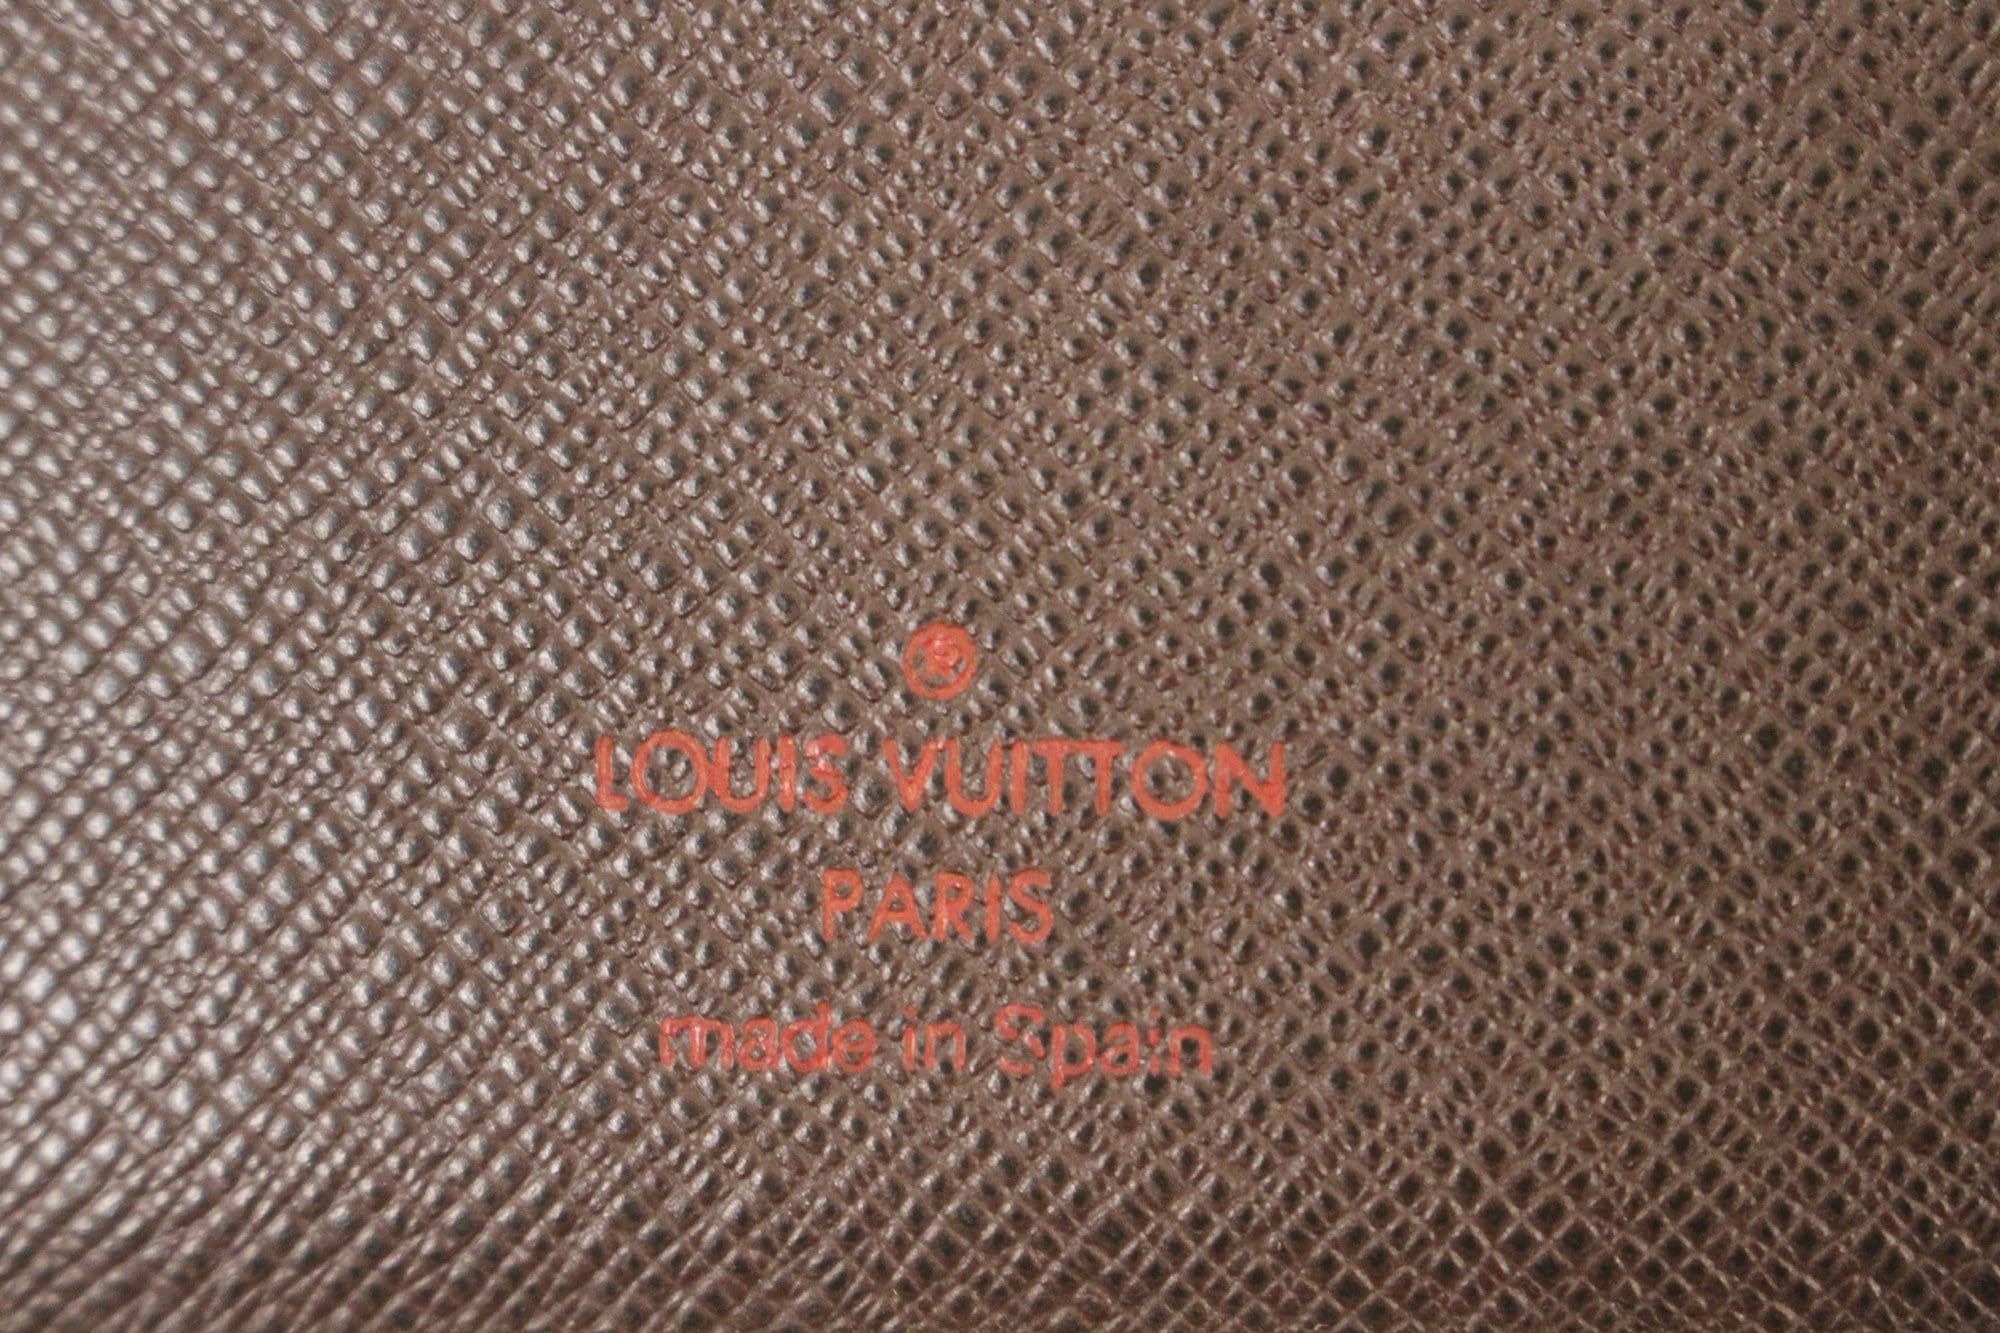 LOUIS VUITTON Louis Vuitton Monogram Agenda Bureau Notebook Cover